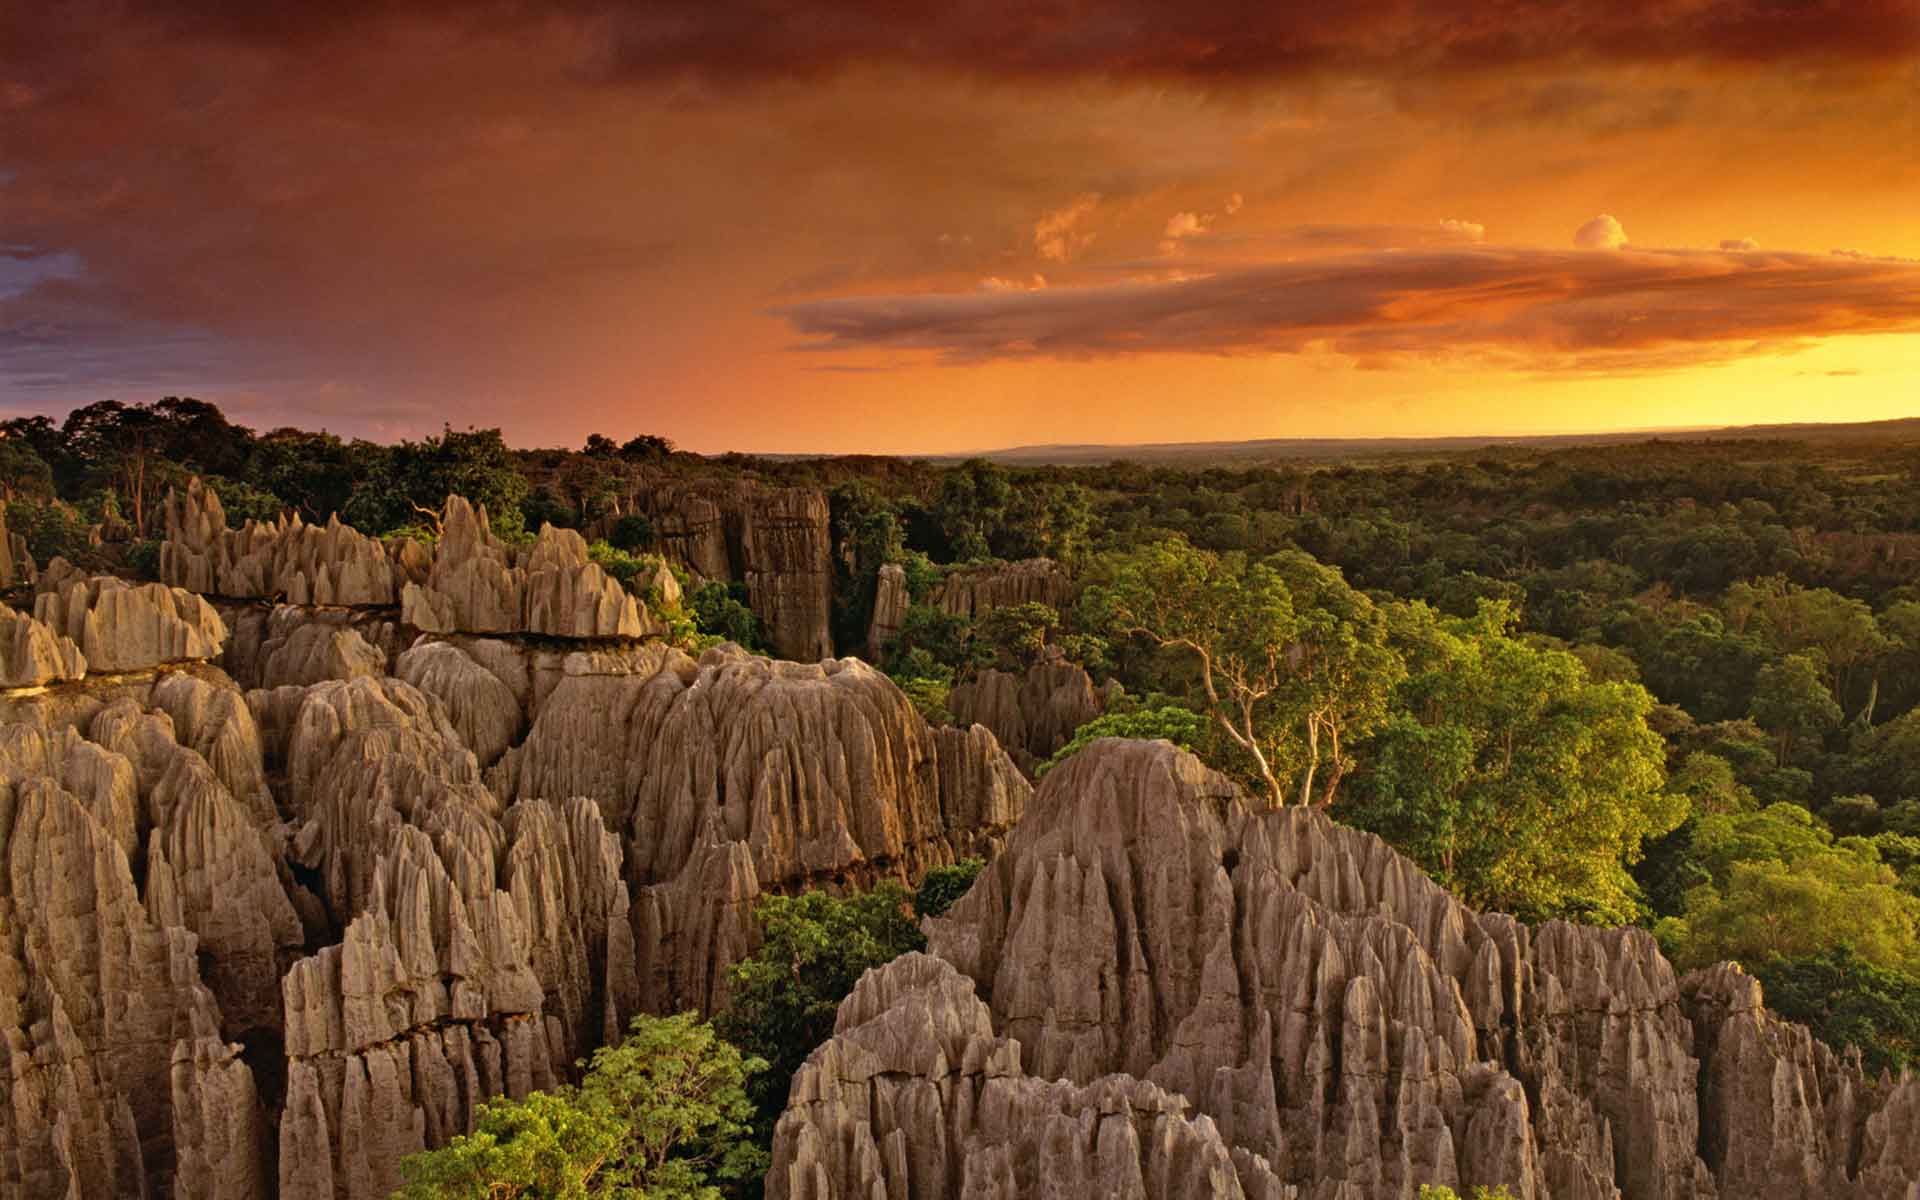 The spectacular limestone landscape of Bemahara